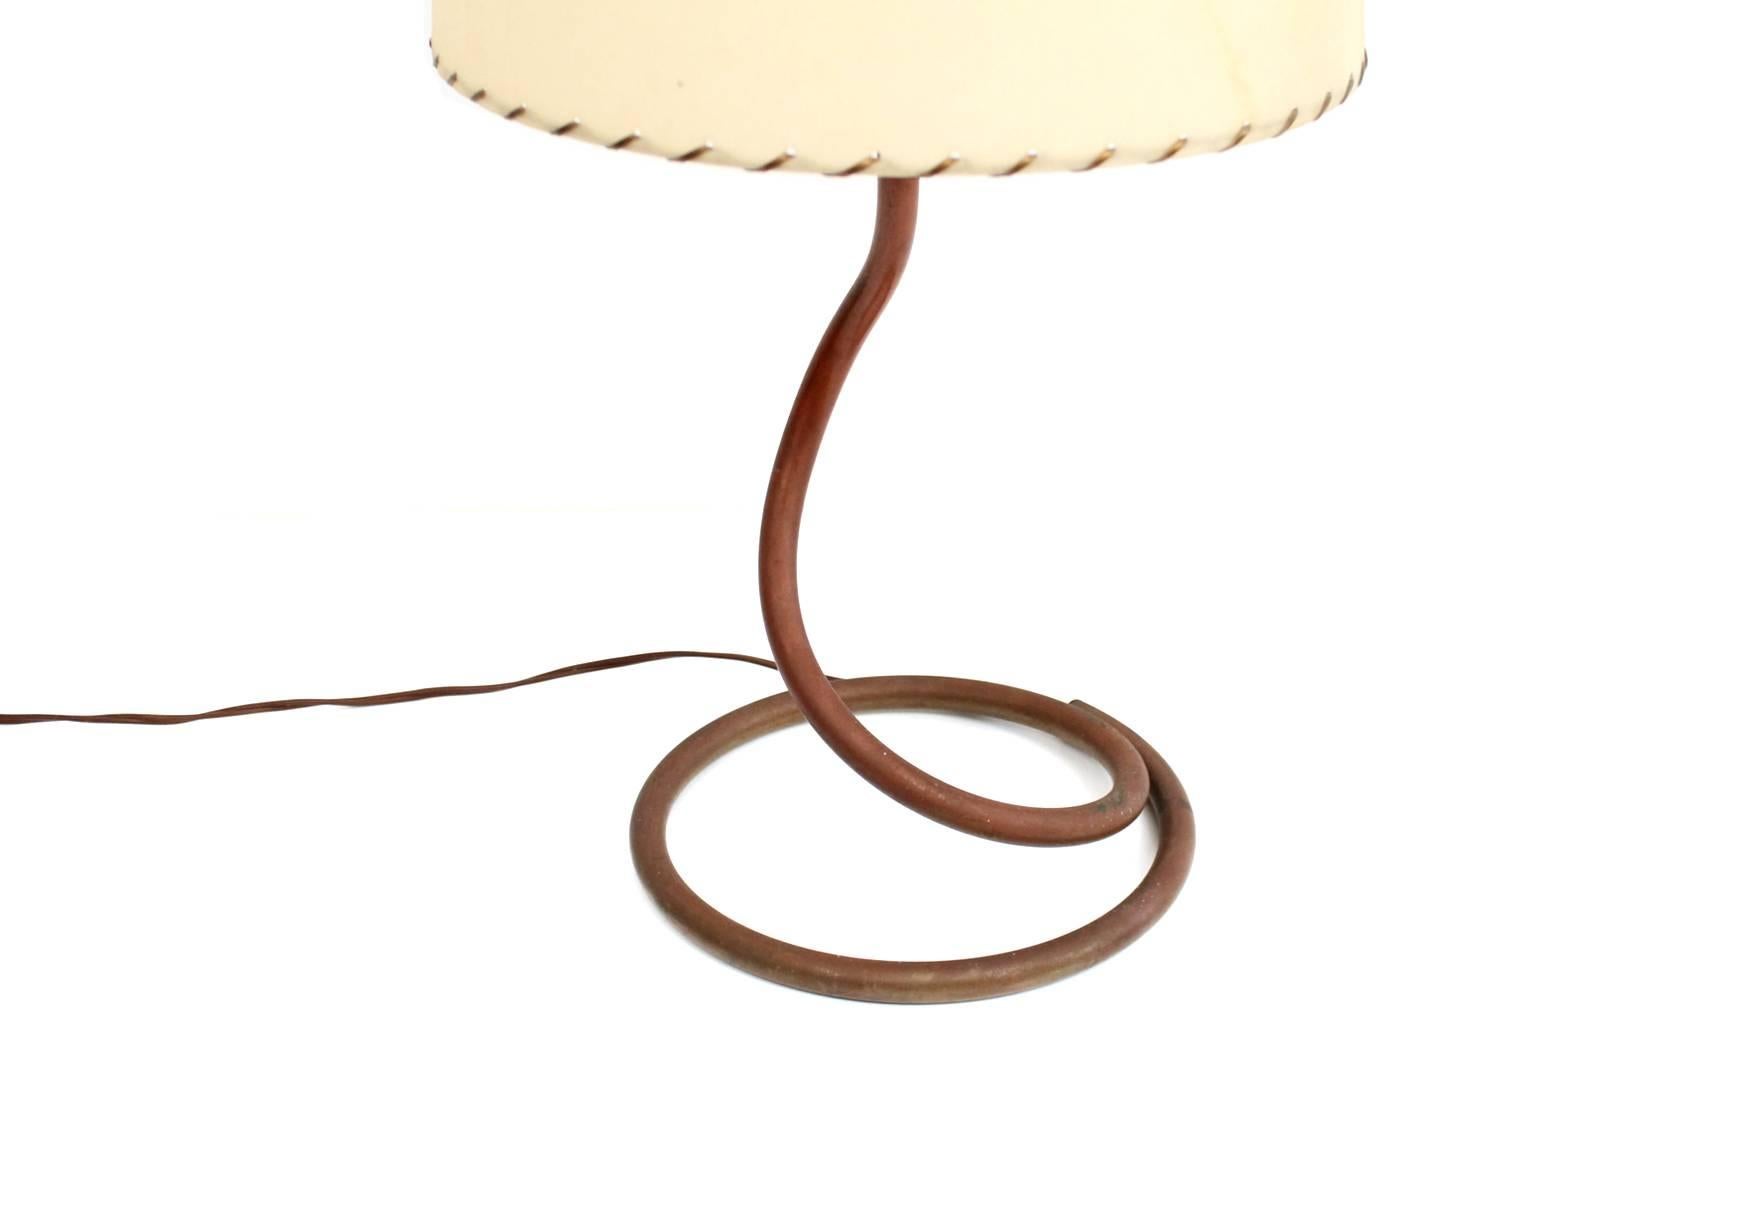 Bakelite Early Modernist Copper Coil Table Lamp Attributed to Kurt Versen